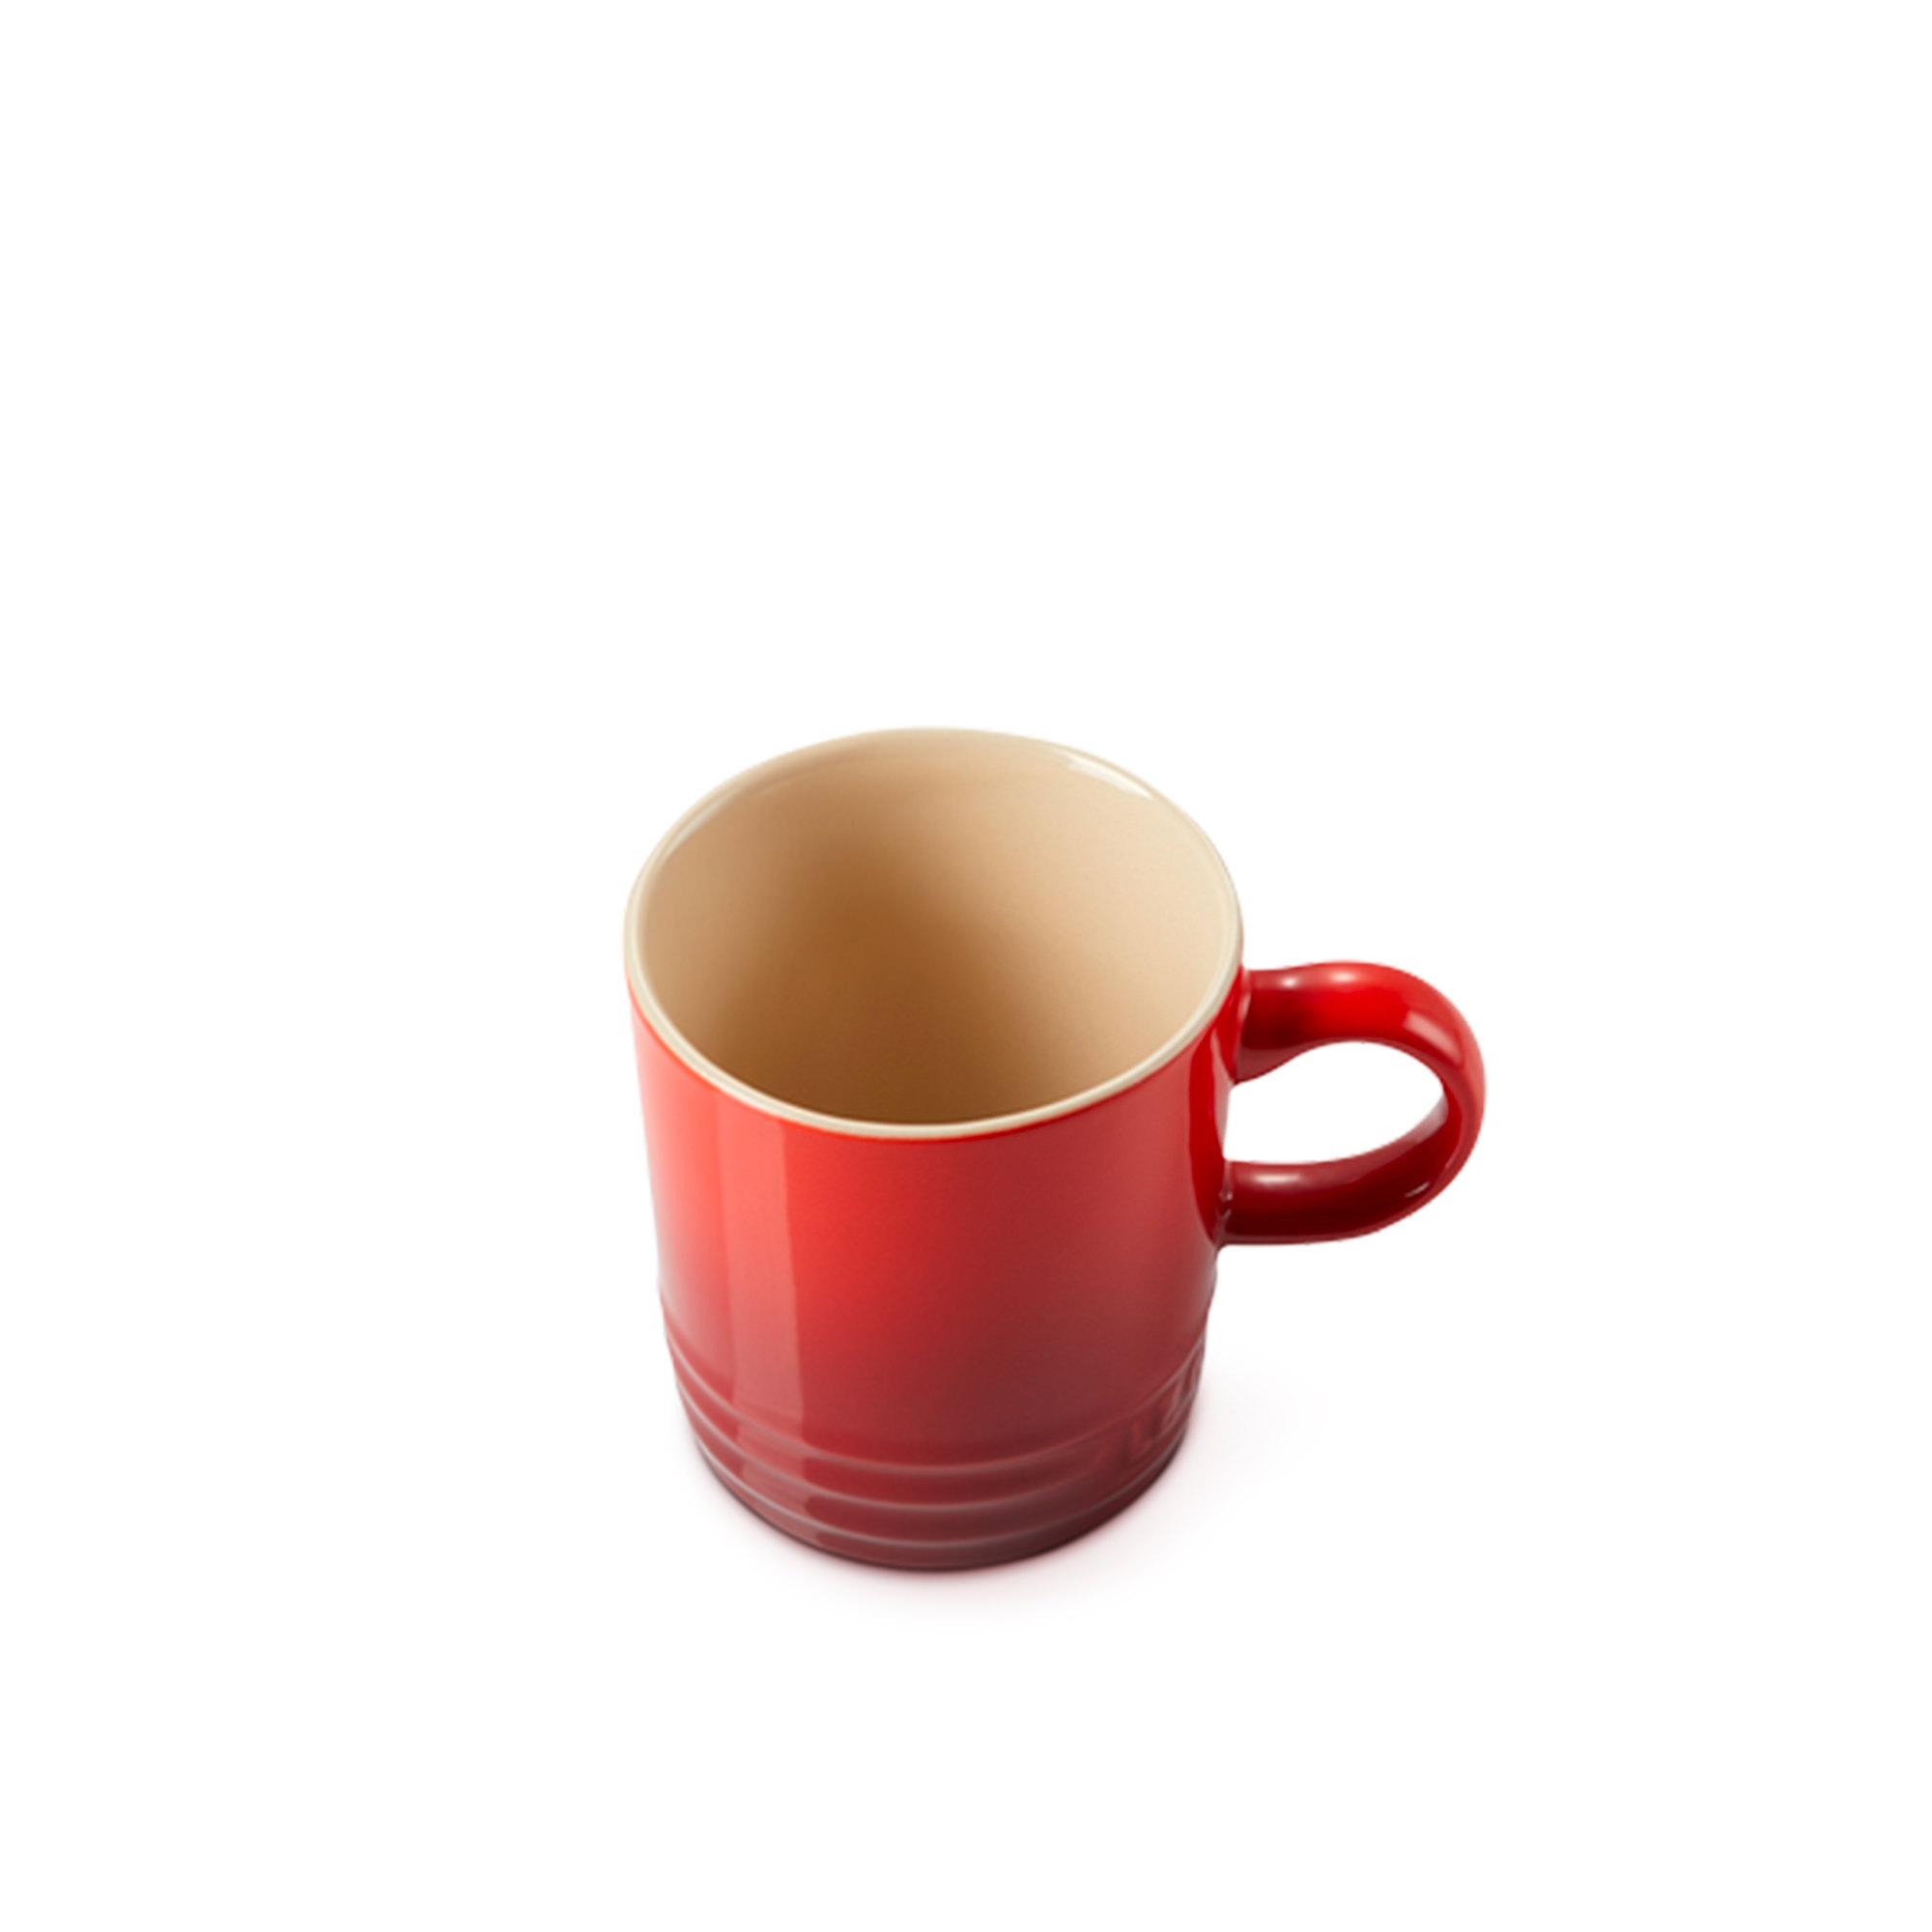 Le Creuset Stoneware Espresso Mug 100ml Cerise Image 3